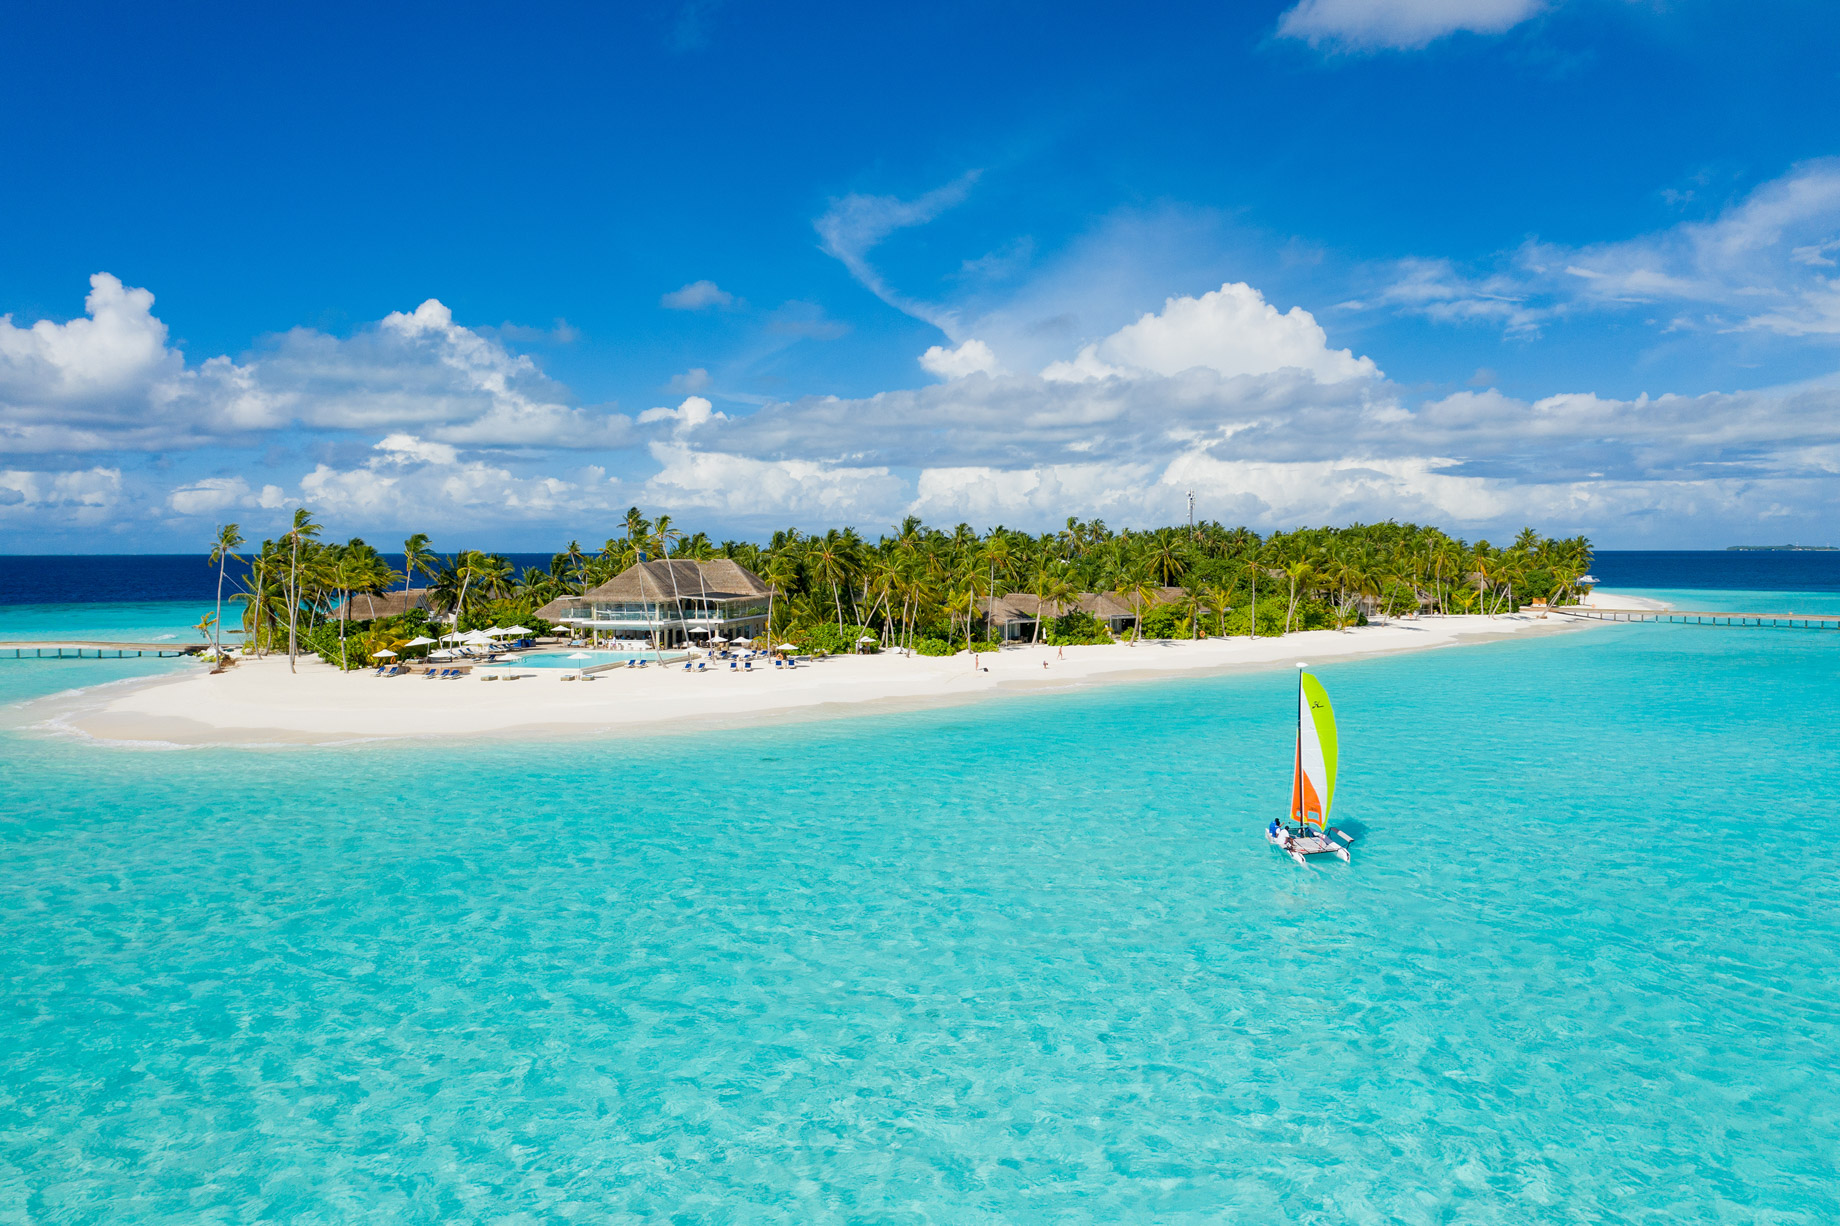 Baglioni Resort Maldives – Maagau Island, Rinbudhoo, Maldives – Sailing